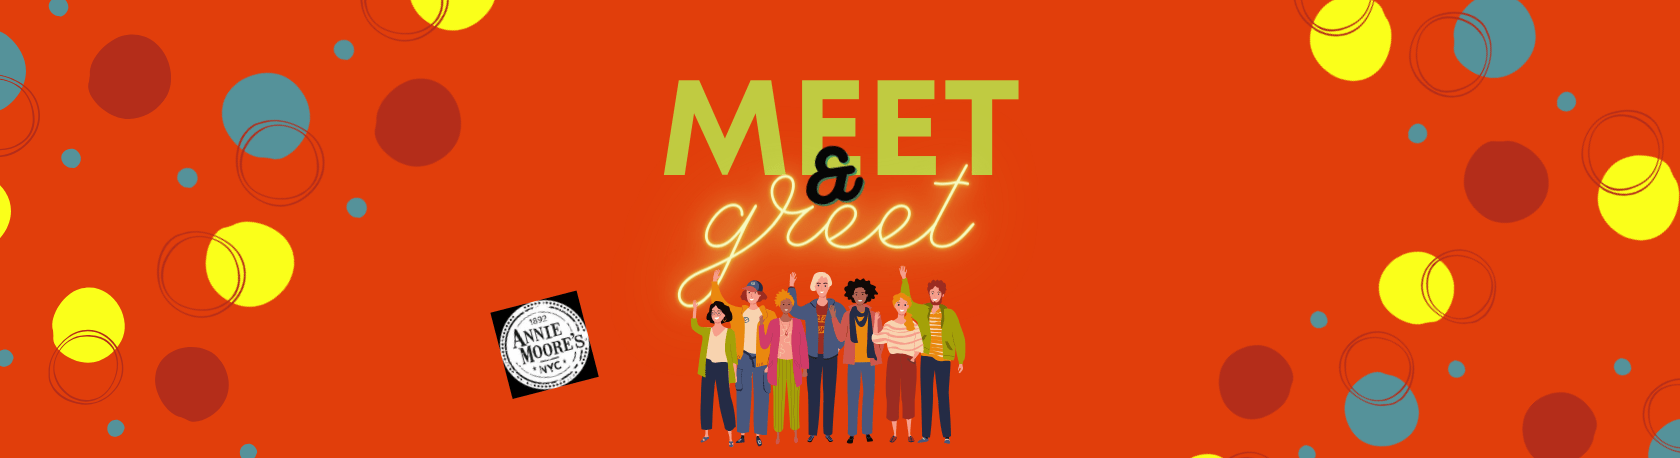 Let's Have Fun in Spanish: Meet & Greet and Make New Amigos - Speak Spanish - Spanish Conversation - Easy Español